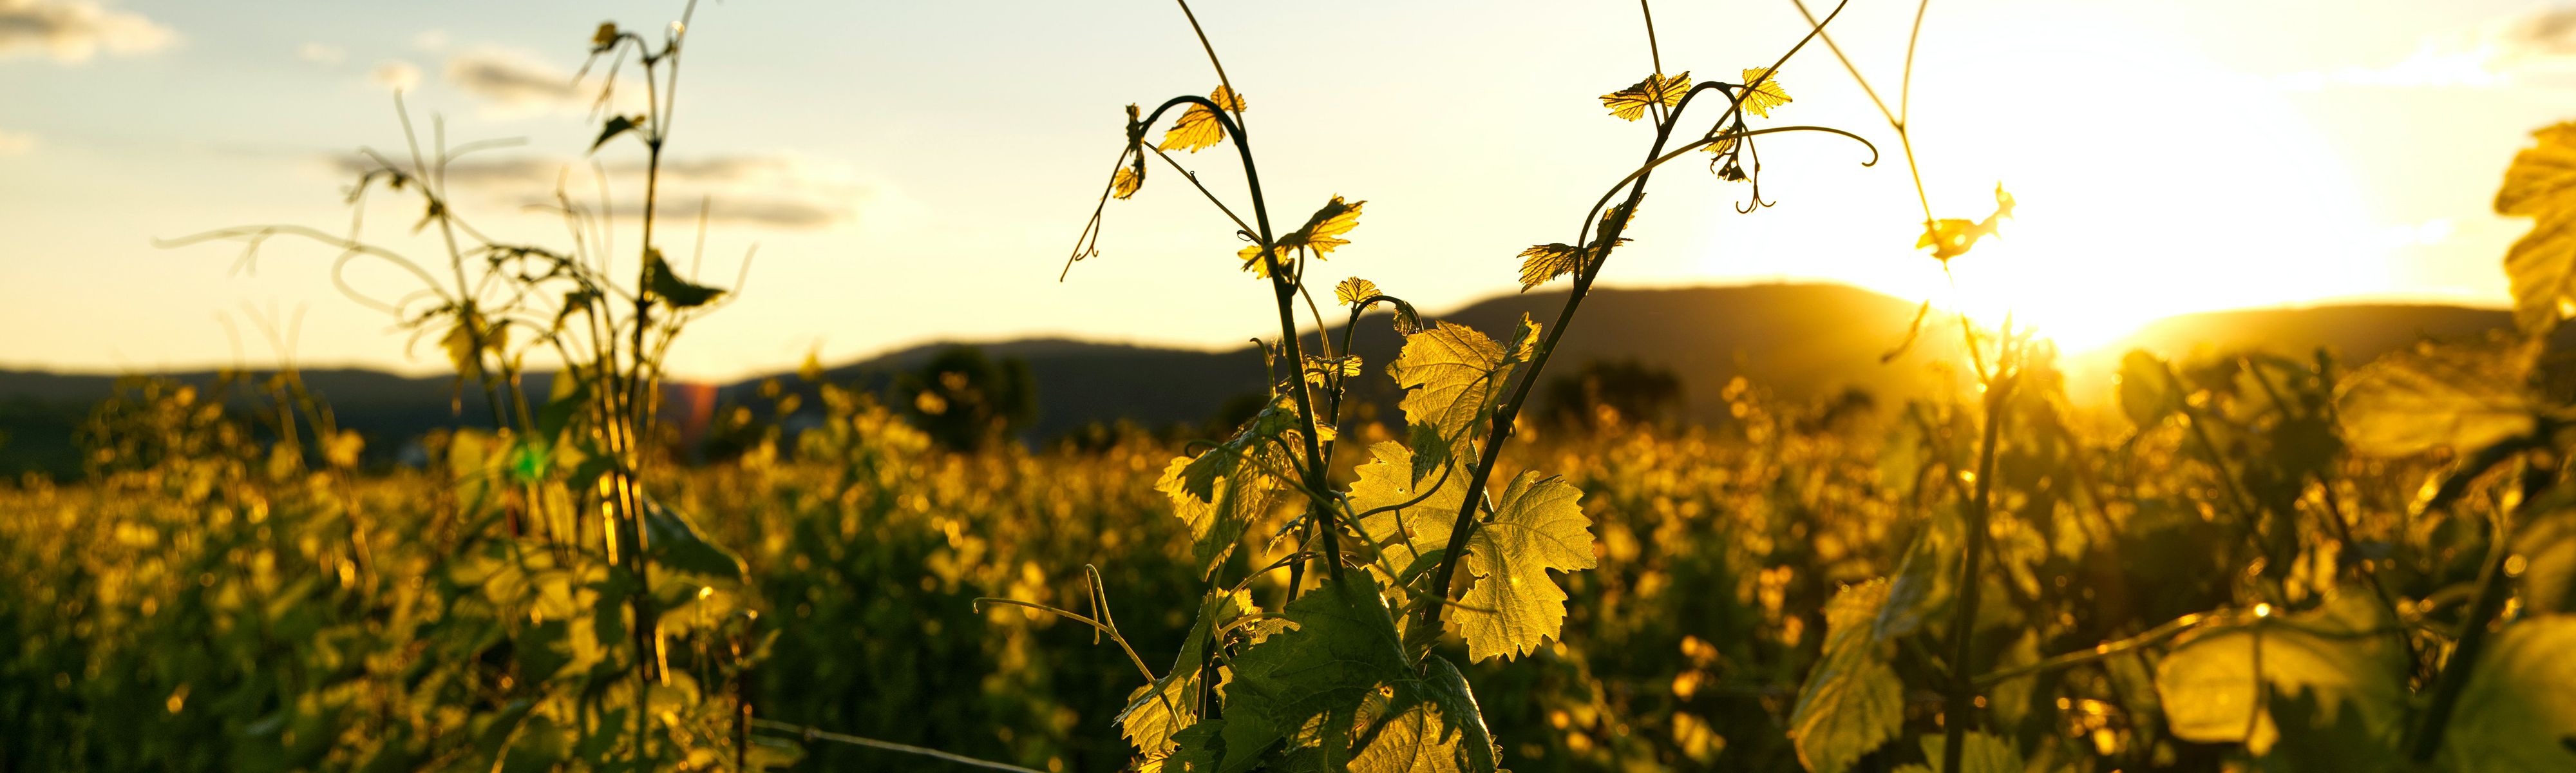 sun shining through grape leaves in vineyard in france